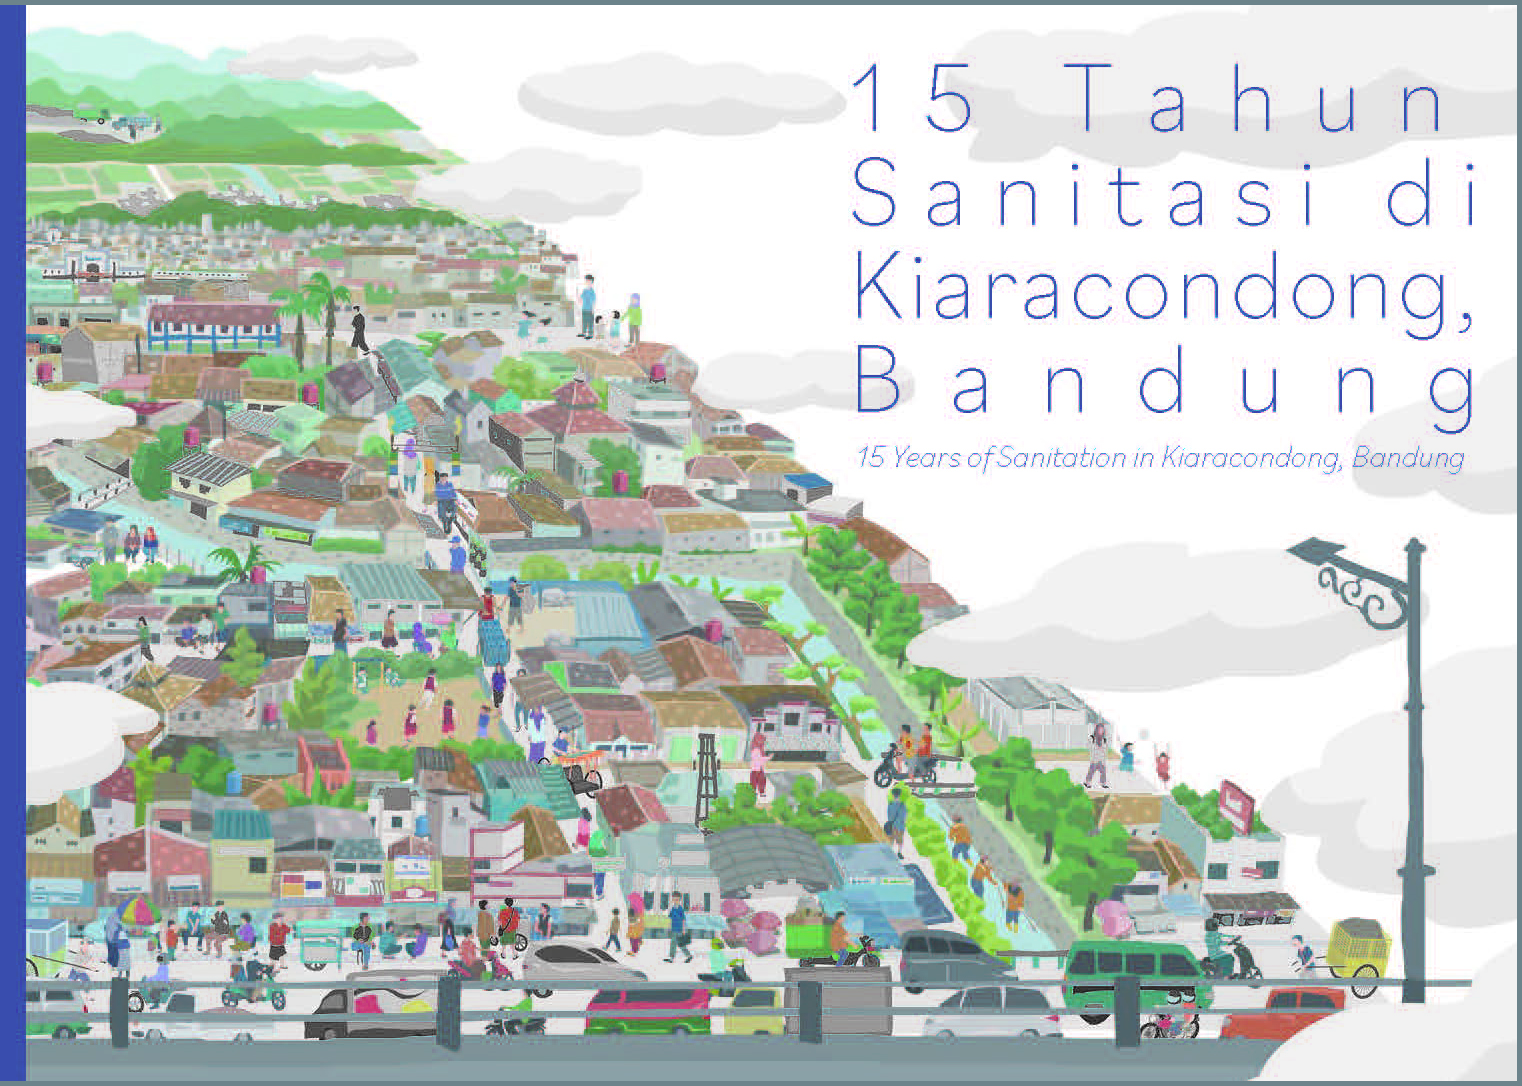 15 Tahun Sanitasi di Kiaracondong, Bandung(15 Years of Sanitation in Kiaracondong, Bandung)